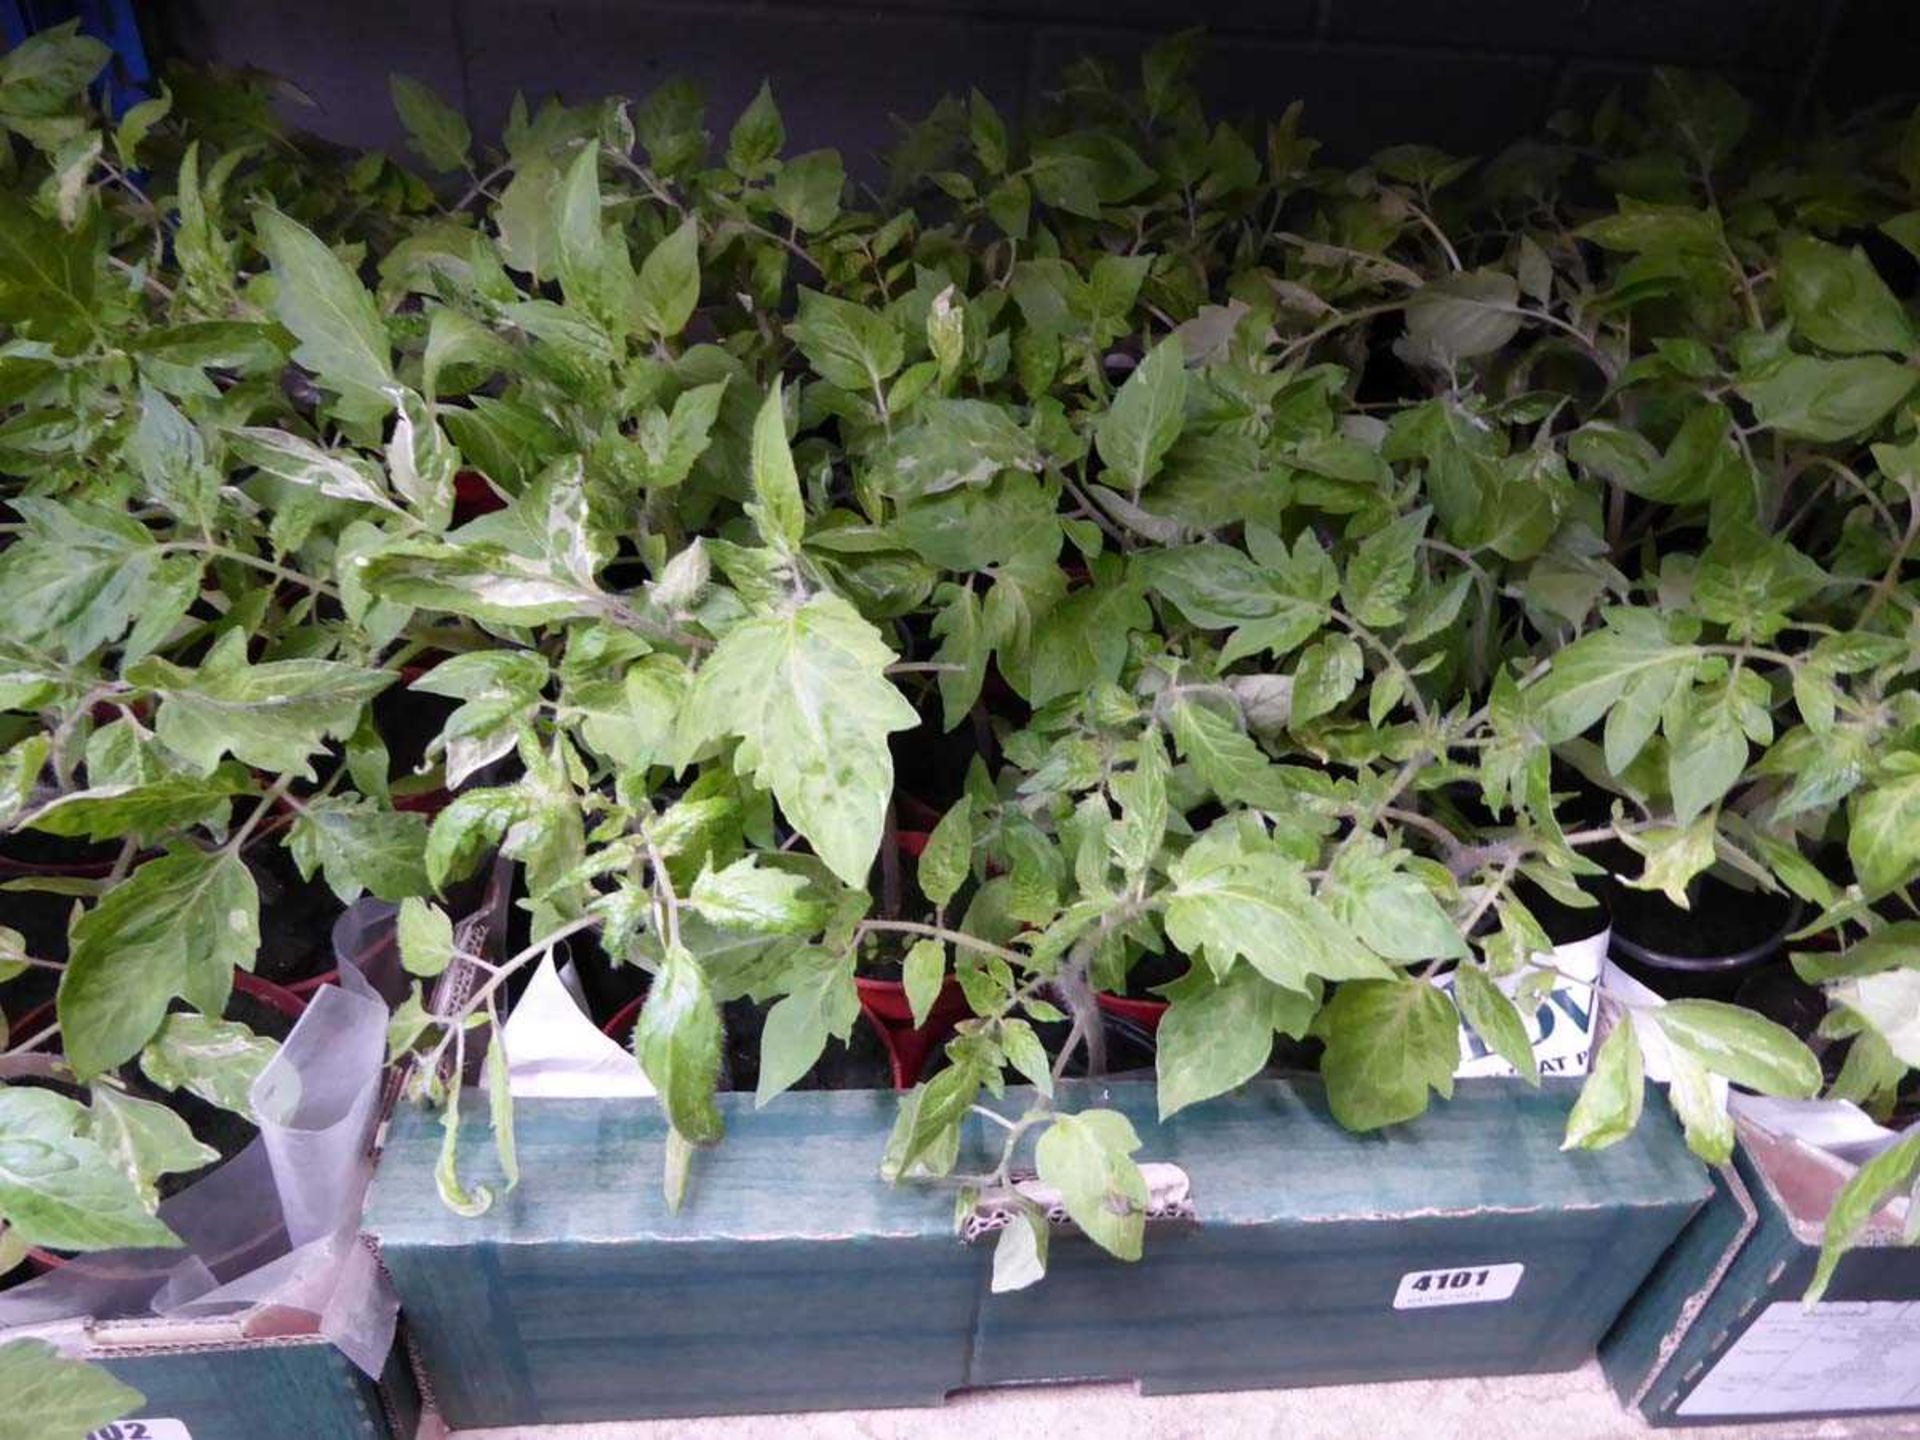 Tray of tomato plants